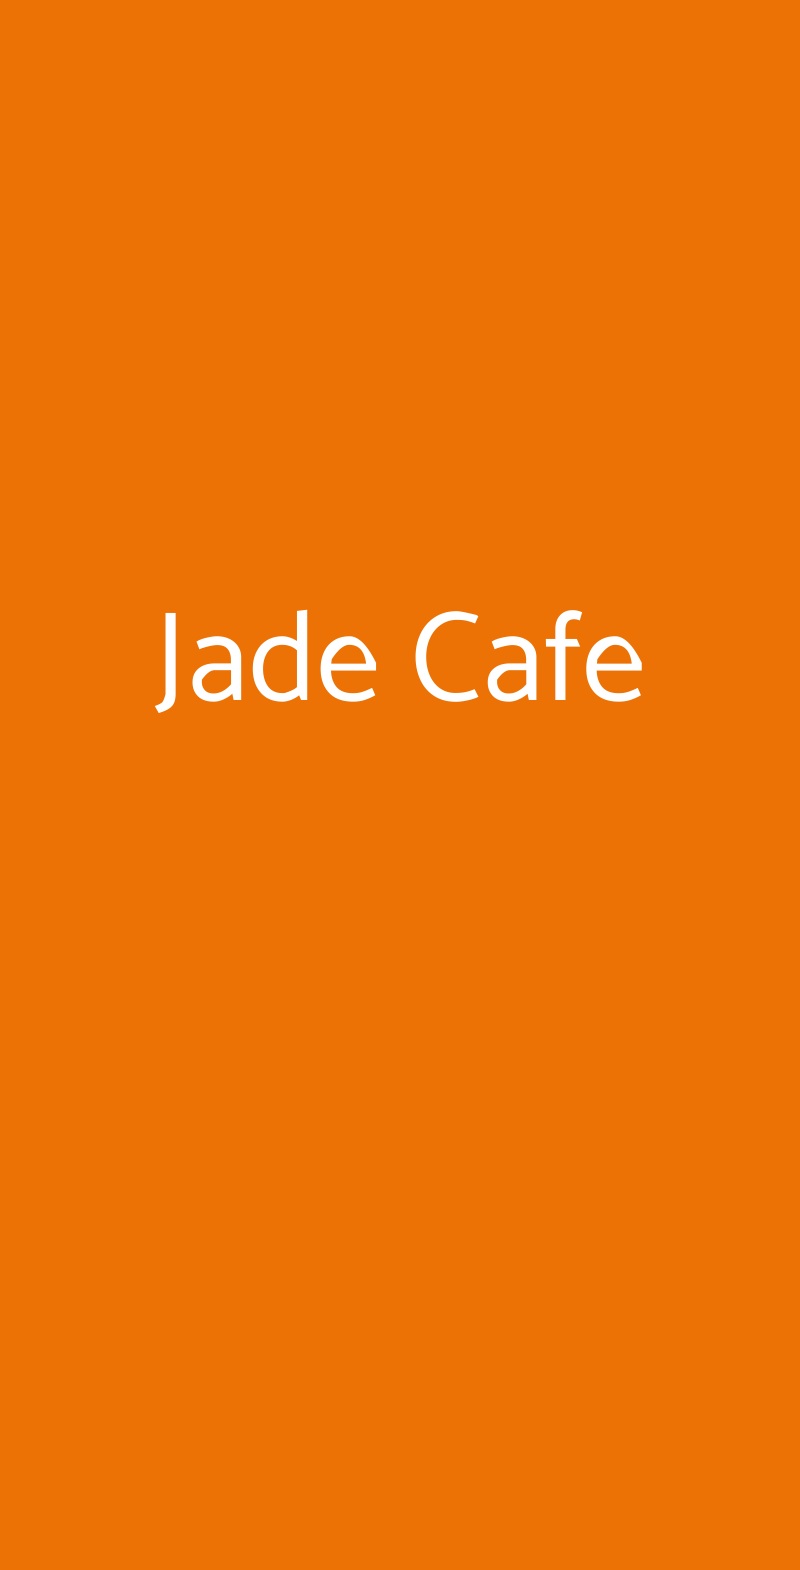 Jade Cafe Milano menù 1 pagina